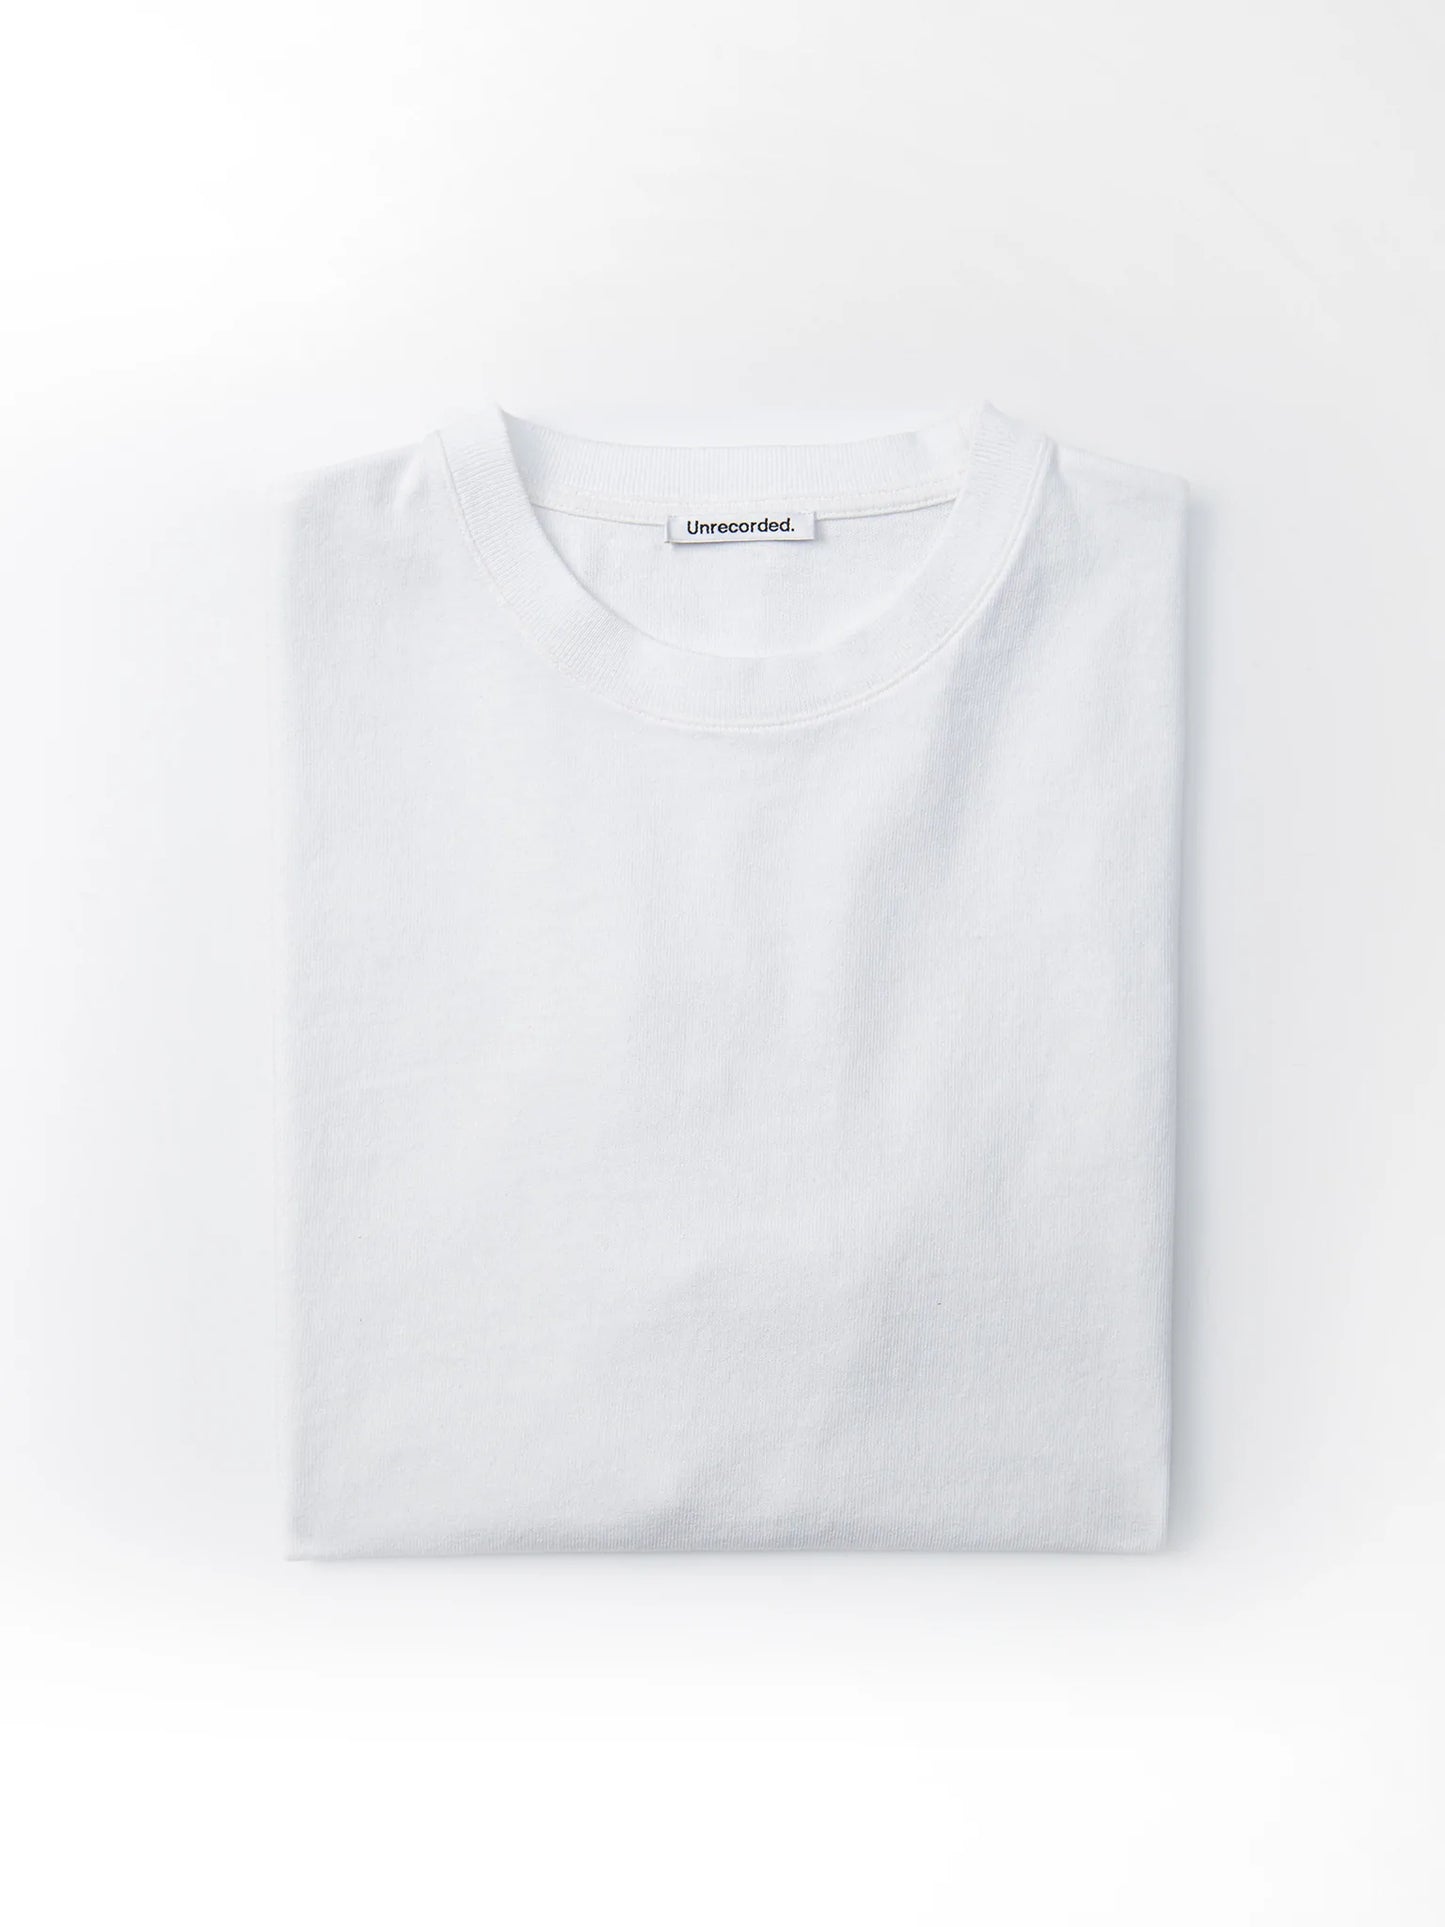 Men's Relaxed Fit Heavyweight Organic Cotton T-Shirt